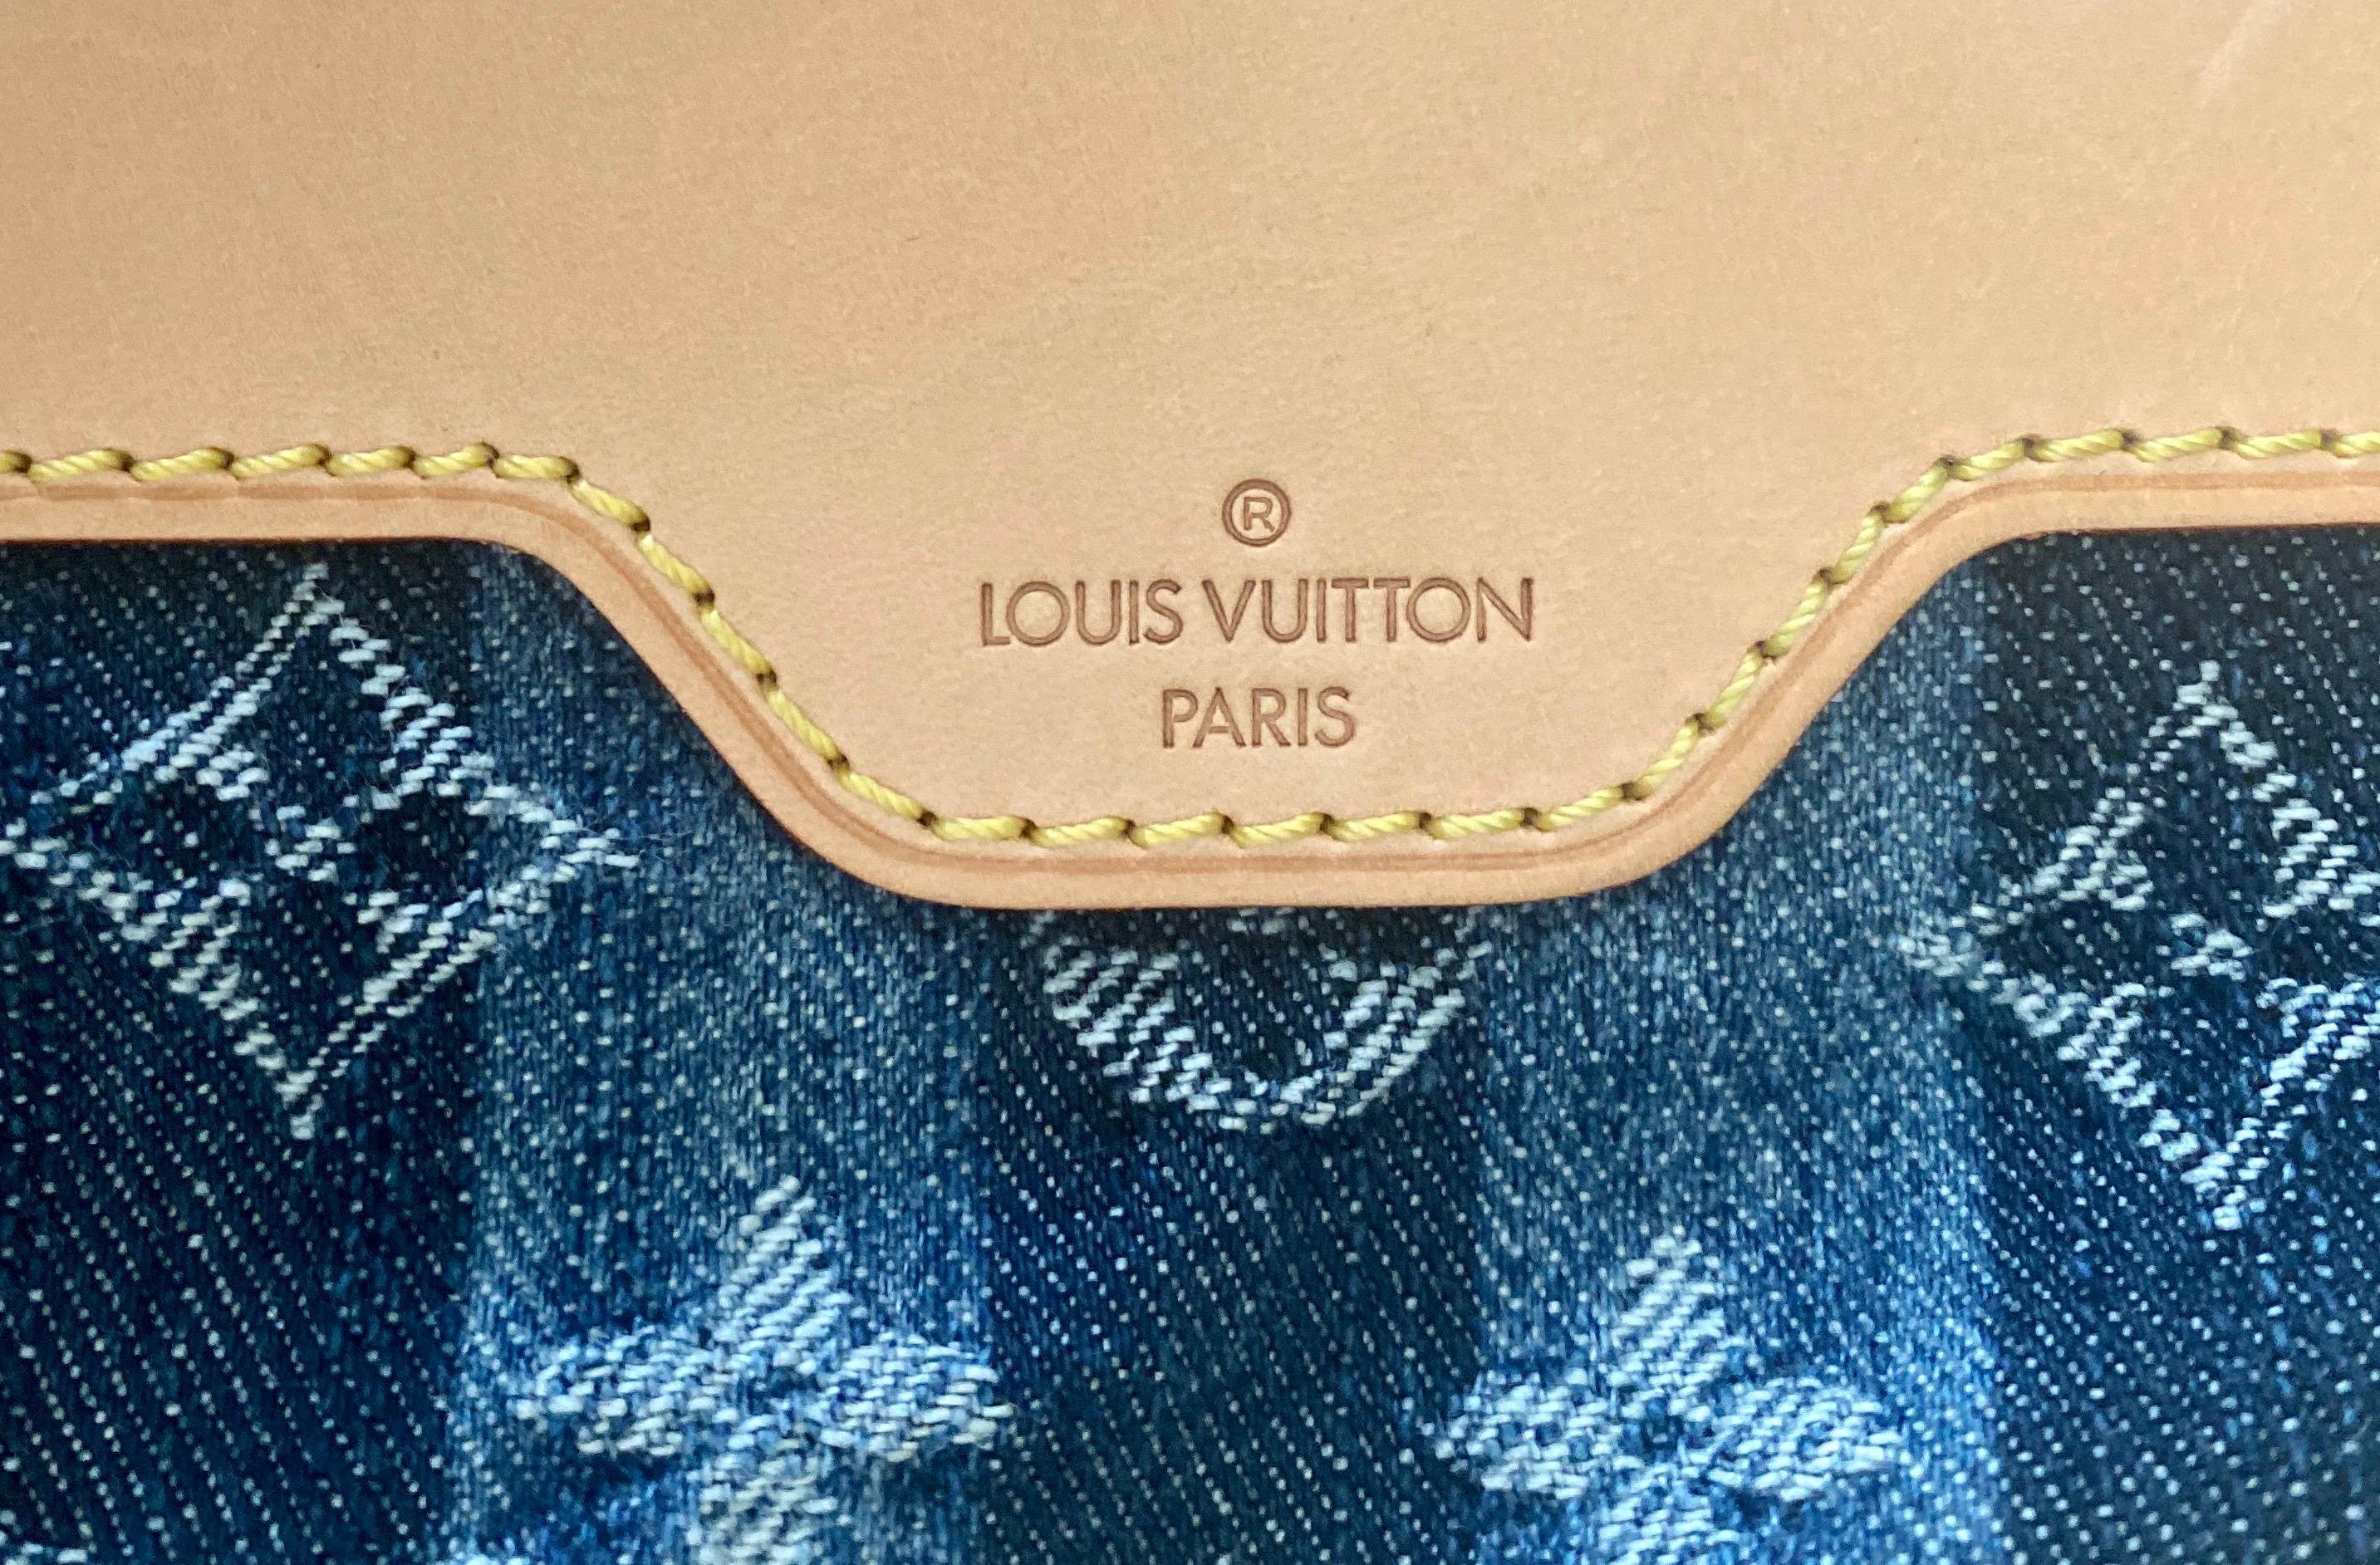 LOUIS VUITTON Monogram Denim Trunks & Bags Travel Shoulder Bag Weekender & Charm 6